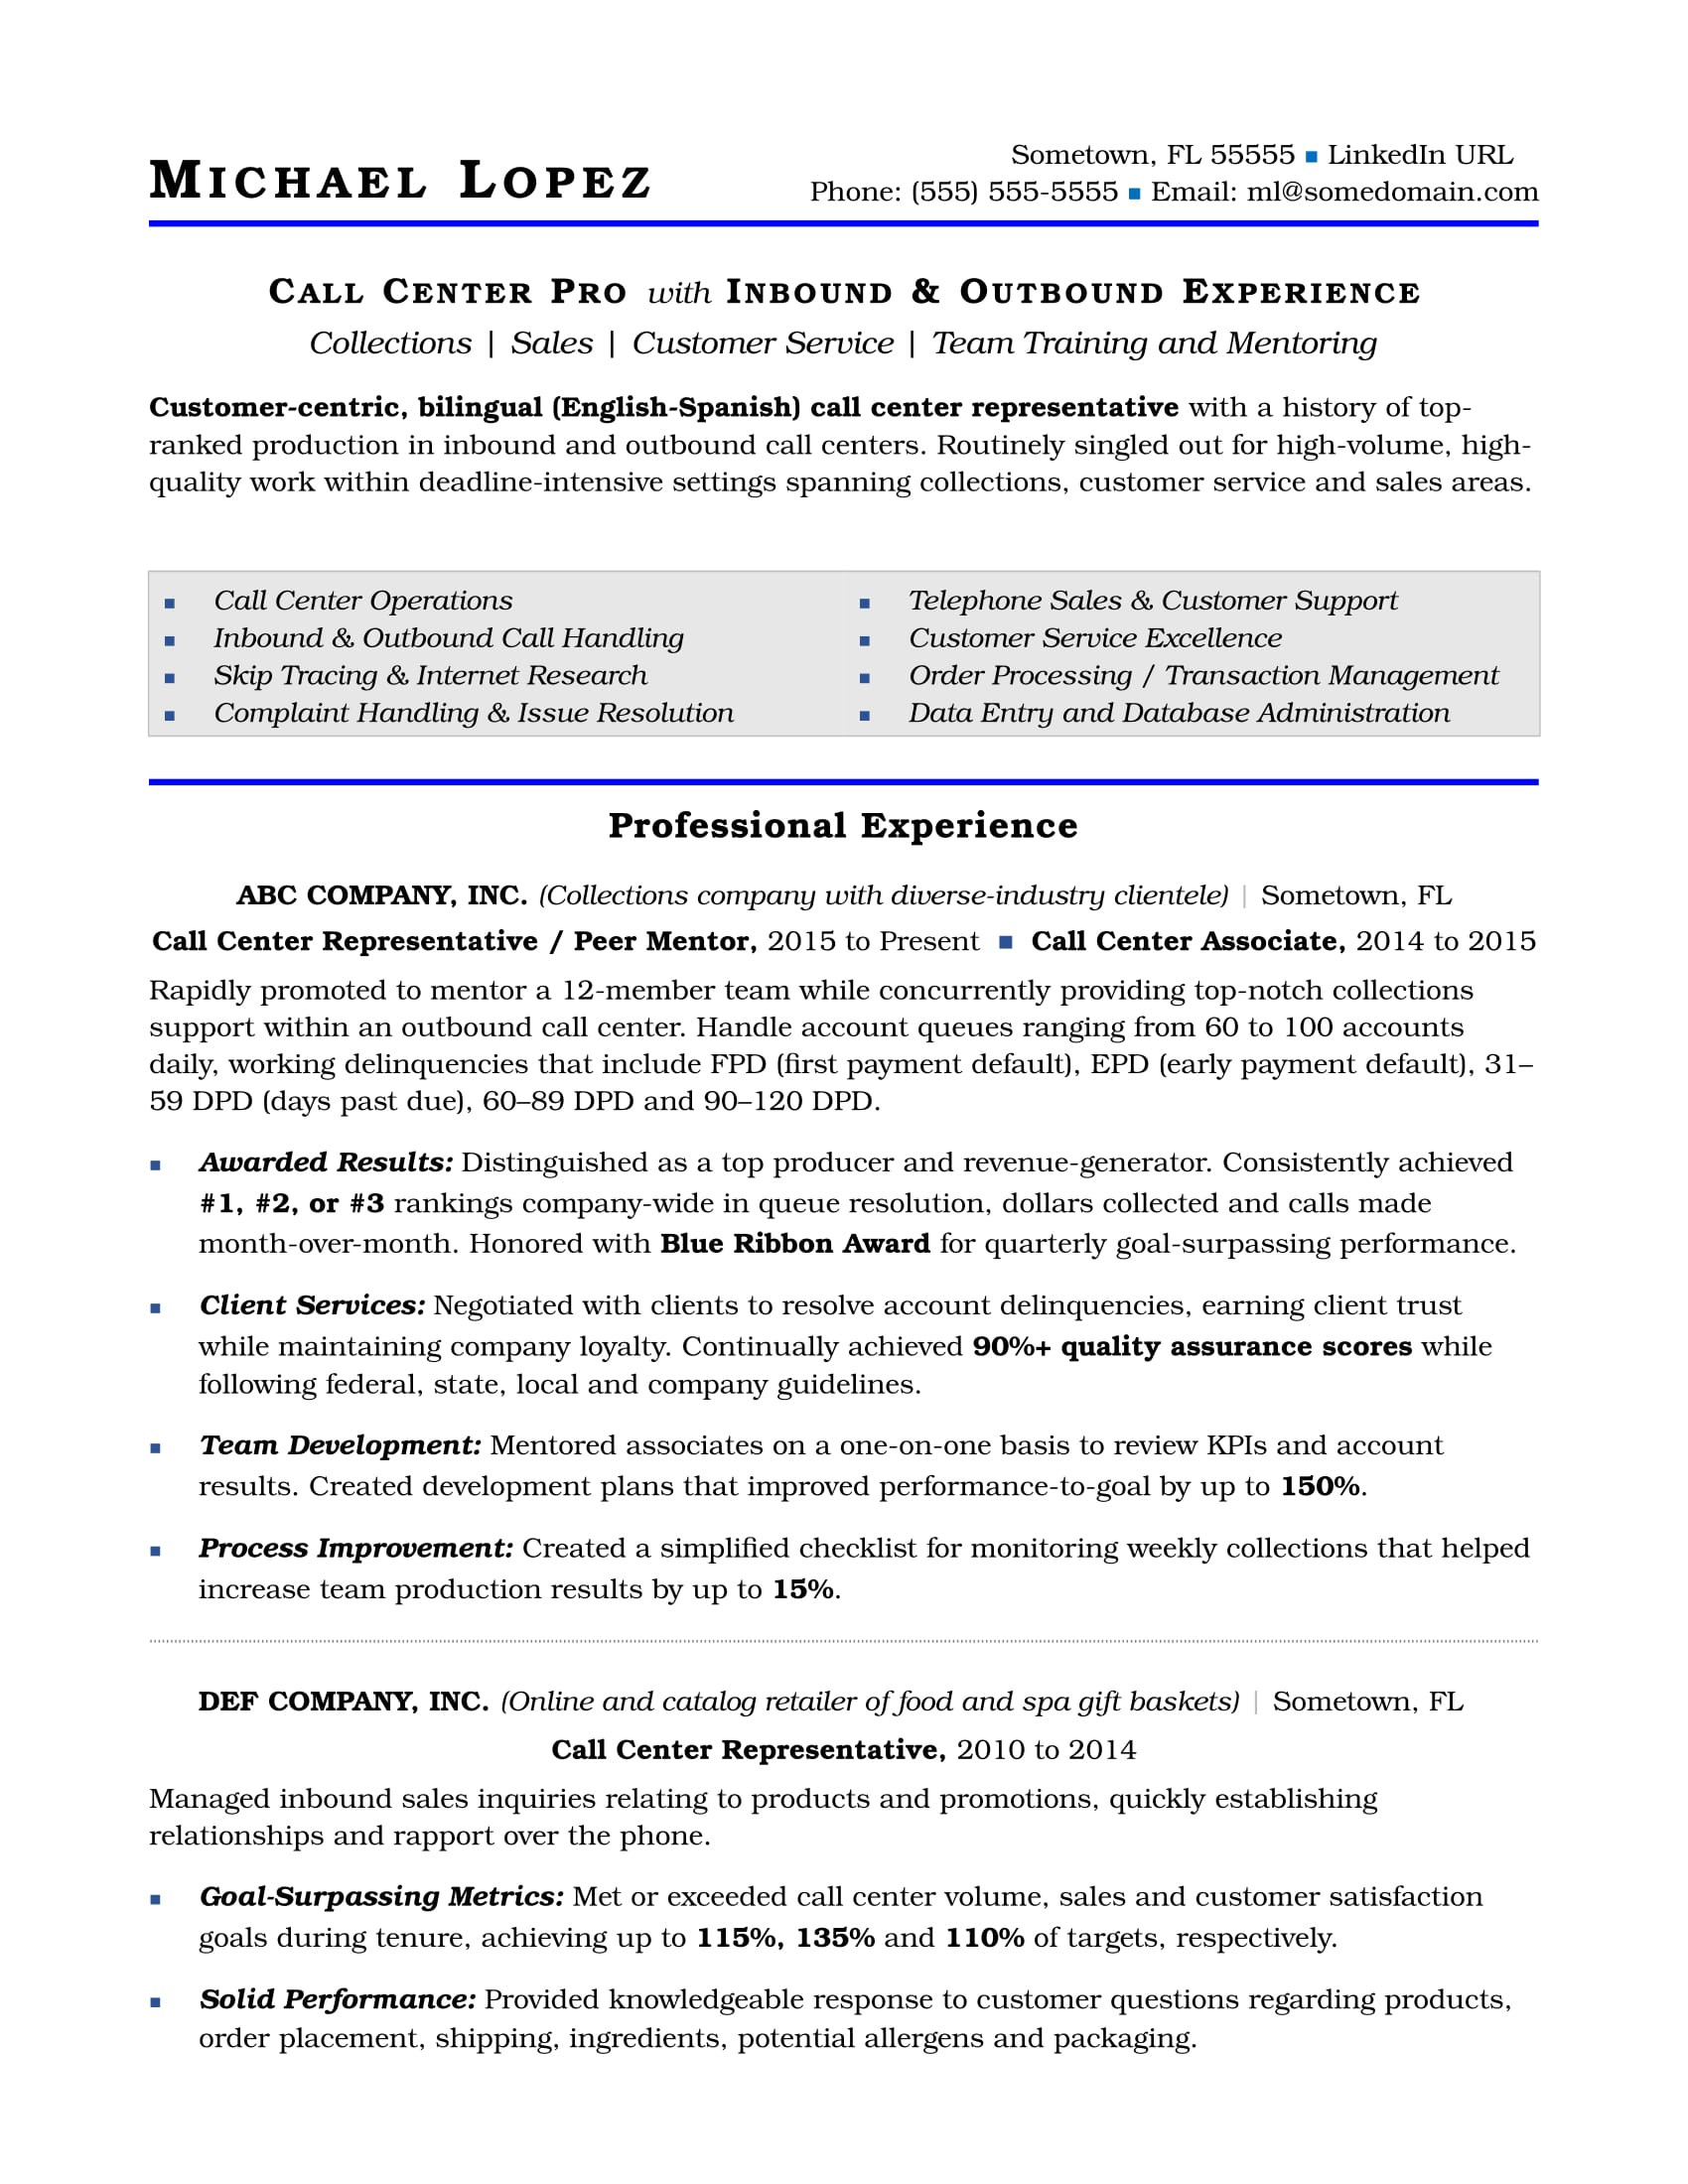 Resume Sample Customer Service Call Center Call Center Resume Sample Monster.com